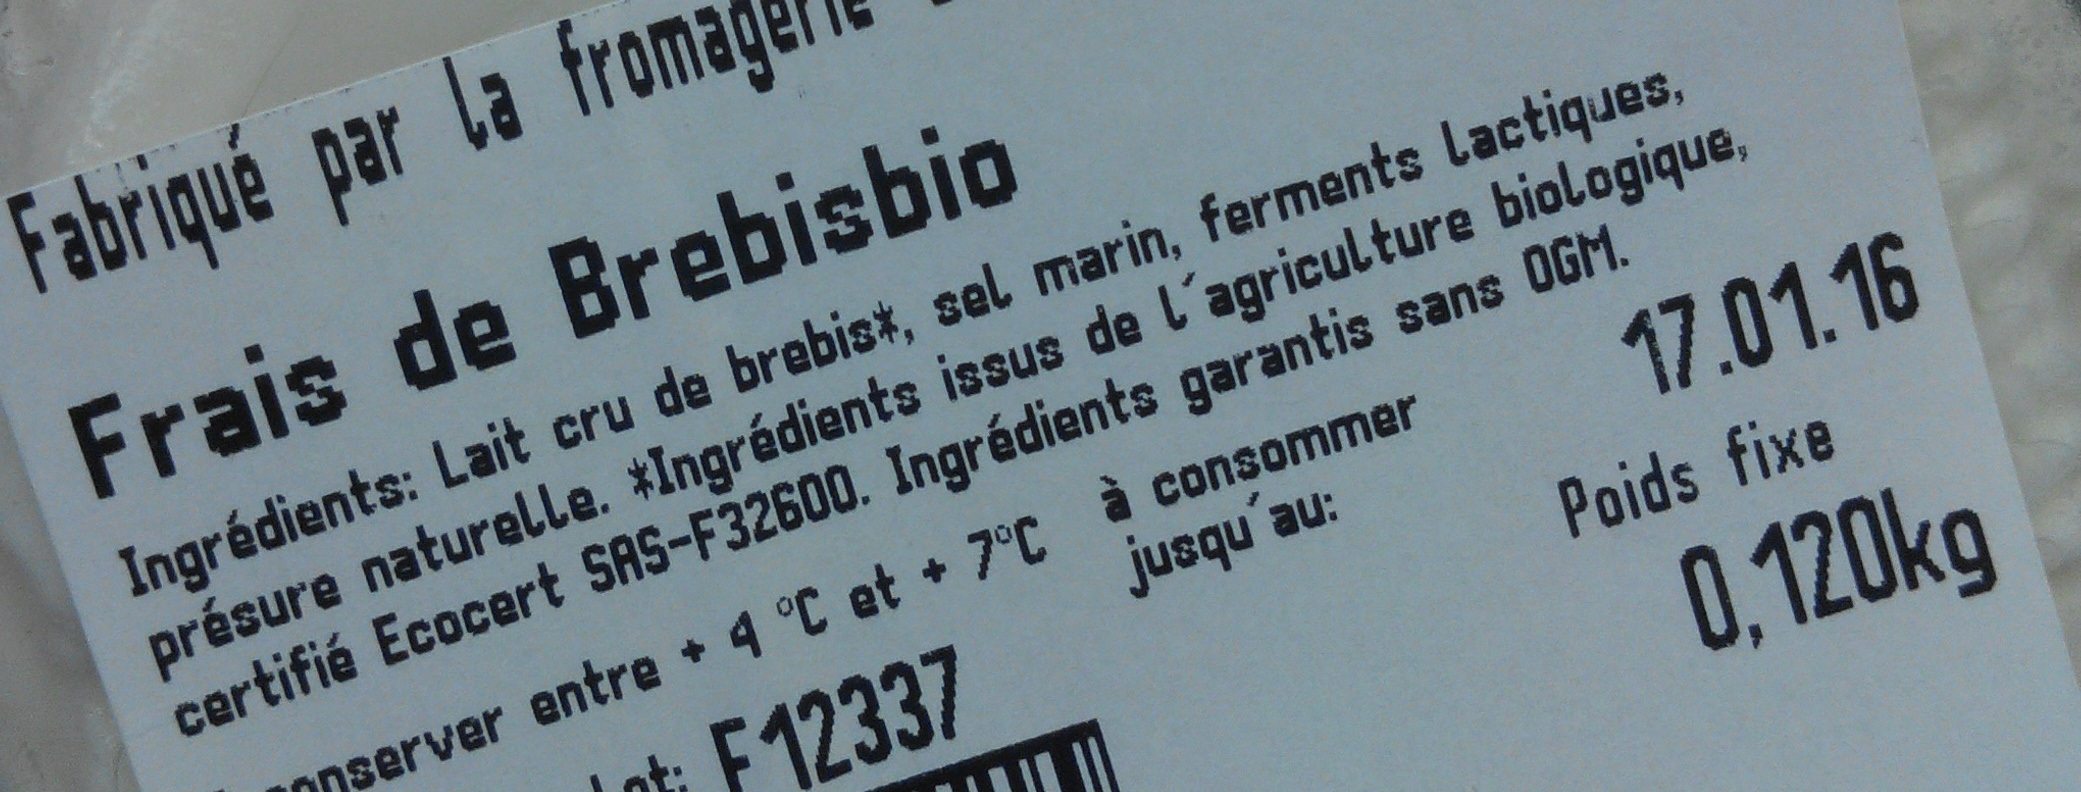 Frais de brebis bio - Ingredients - fr